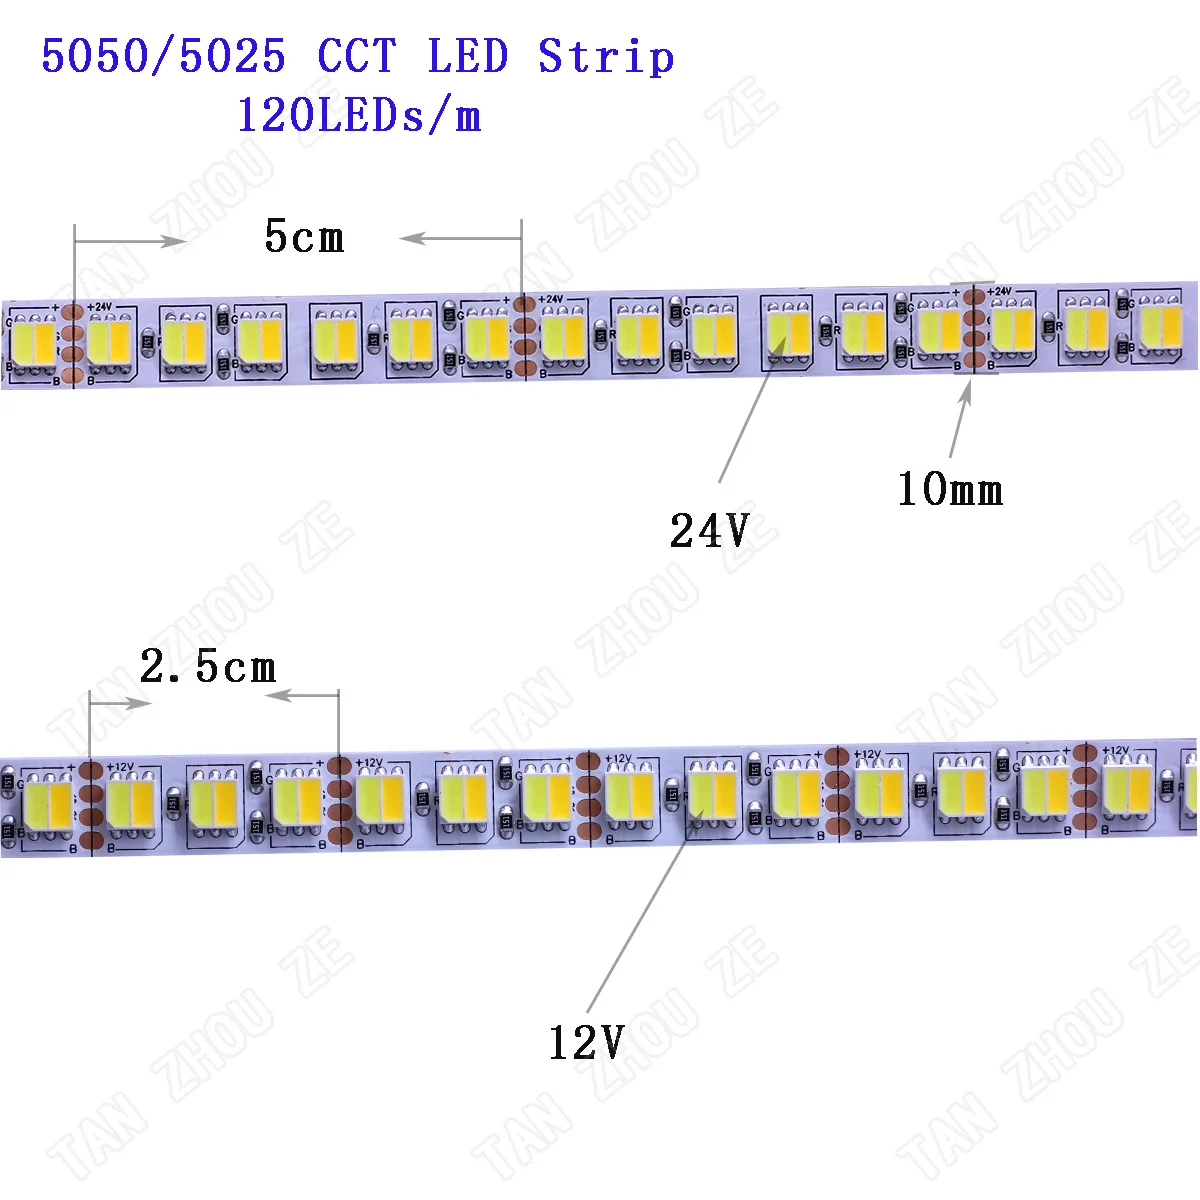 

LED Strip RGBW WW RGBCCT 5050 RGB 2835 Warm White/ White RGB 12V 5025 cct Double Row 120Leds/m 5m Double Row 24V 60 120 180LEDs